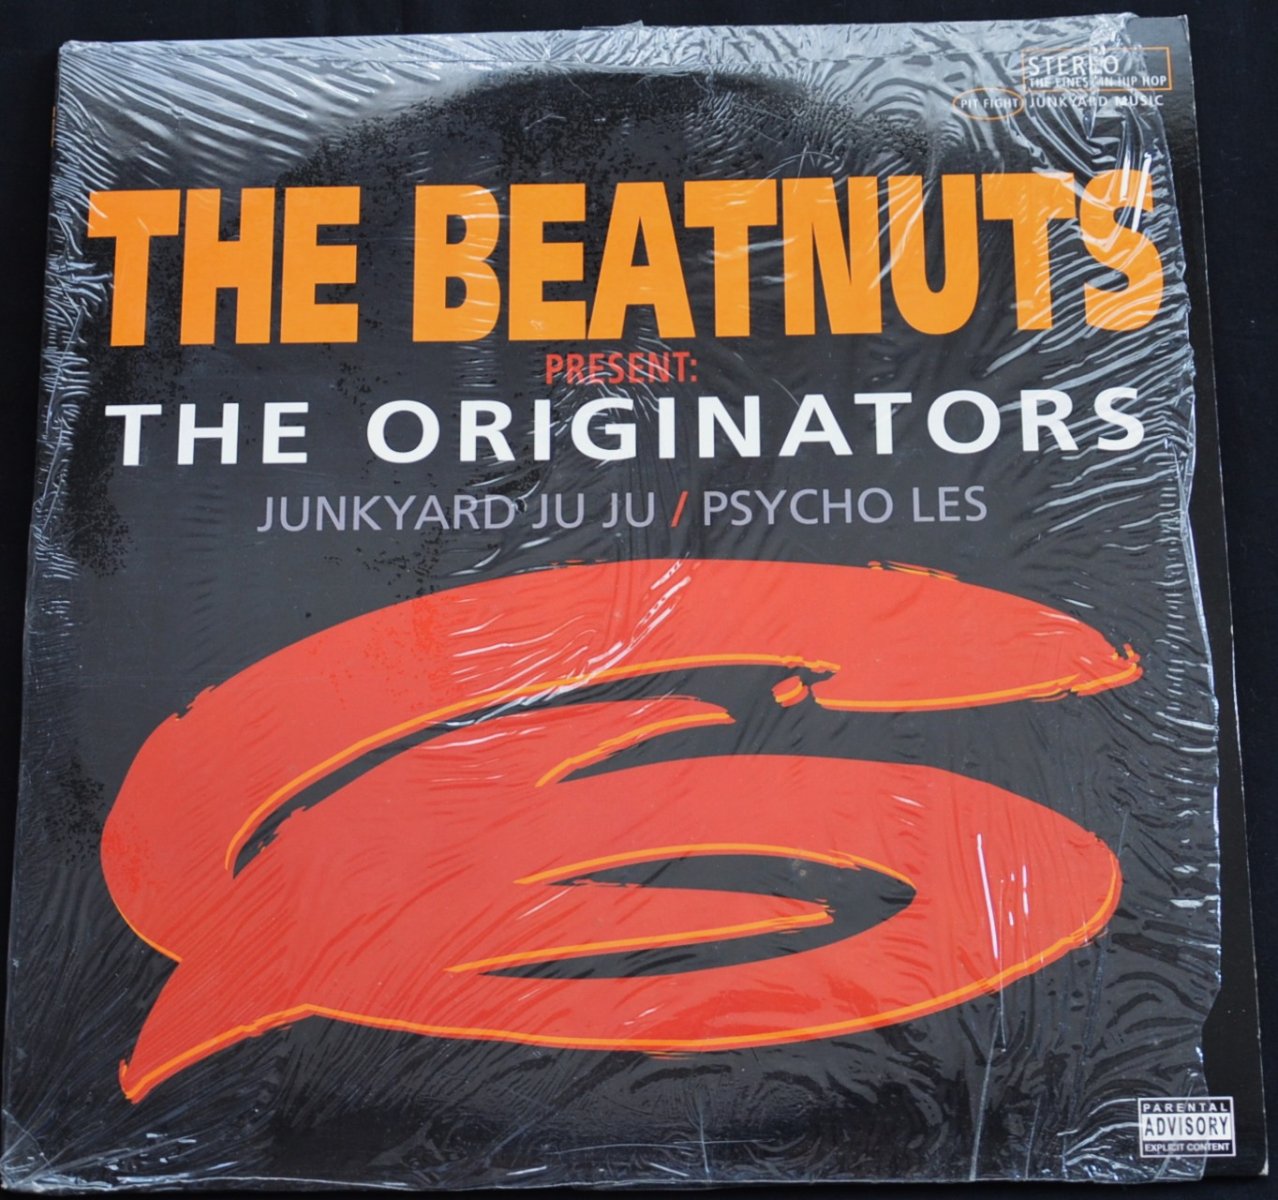 THE BEATNUTS / THE ORIGINATORS (2LP)